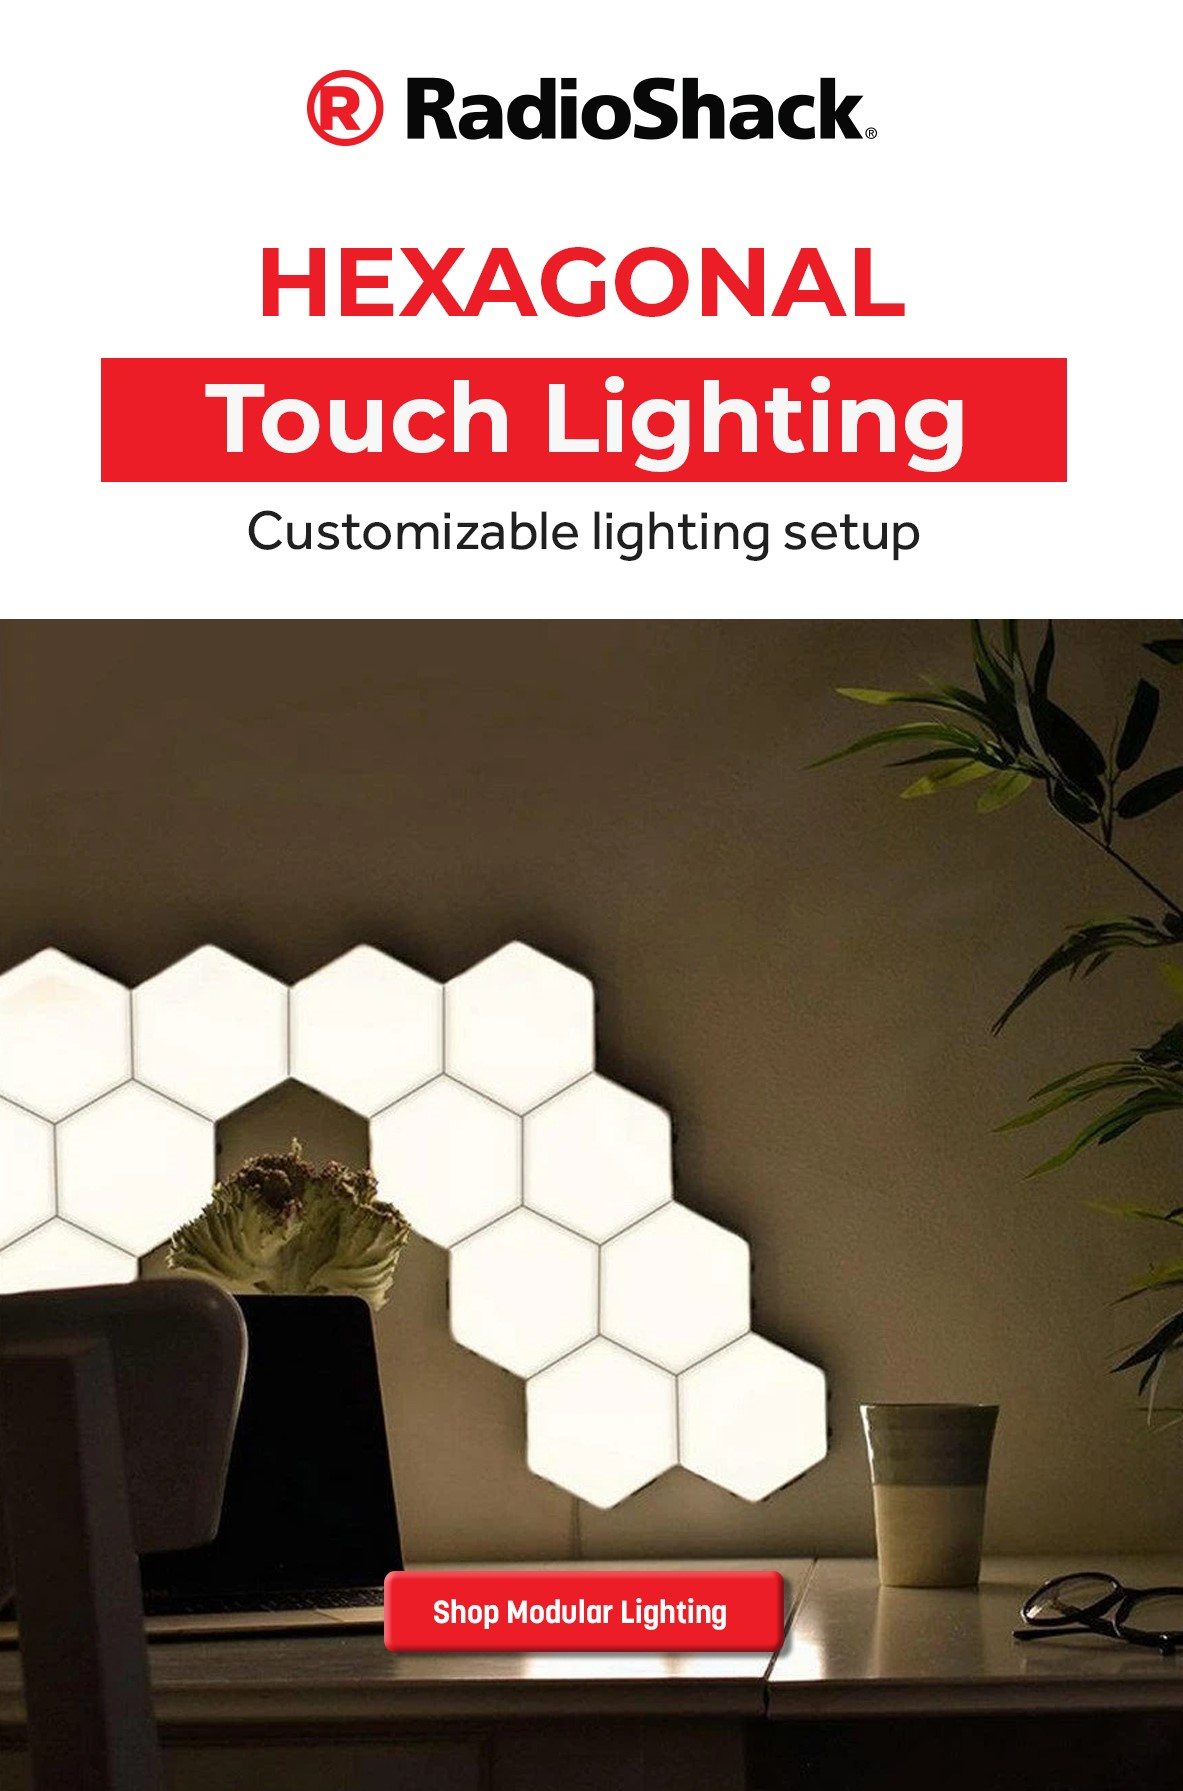 Hexagonal Touch Lighting